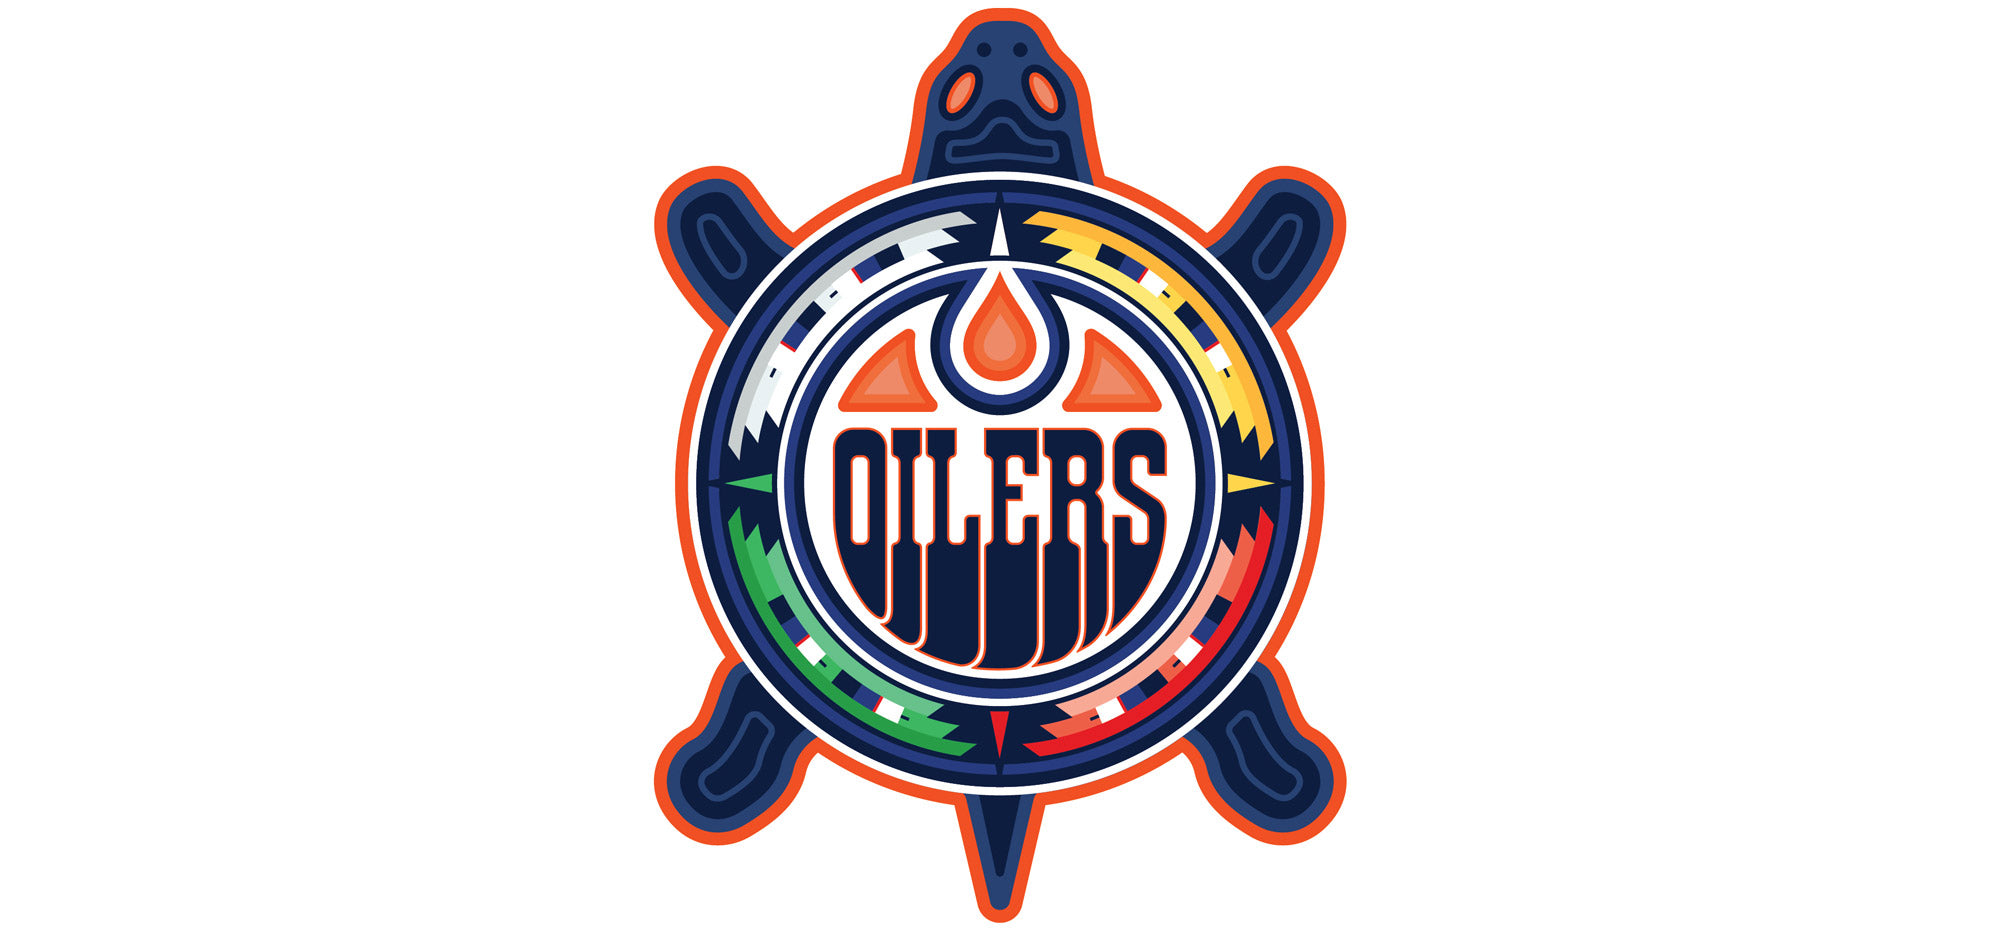 Oilers svg - Turtle Island svg - Treaty 6 svg - Hockey svg - Edmonton svg